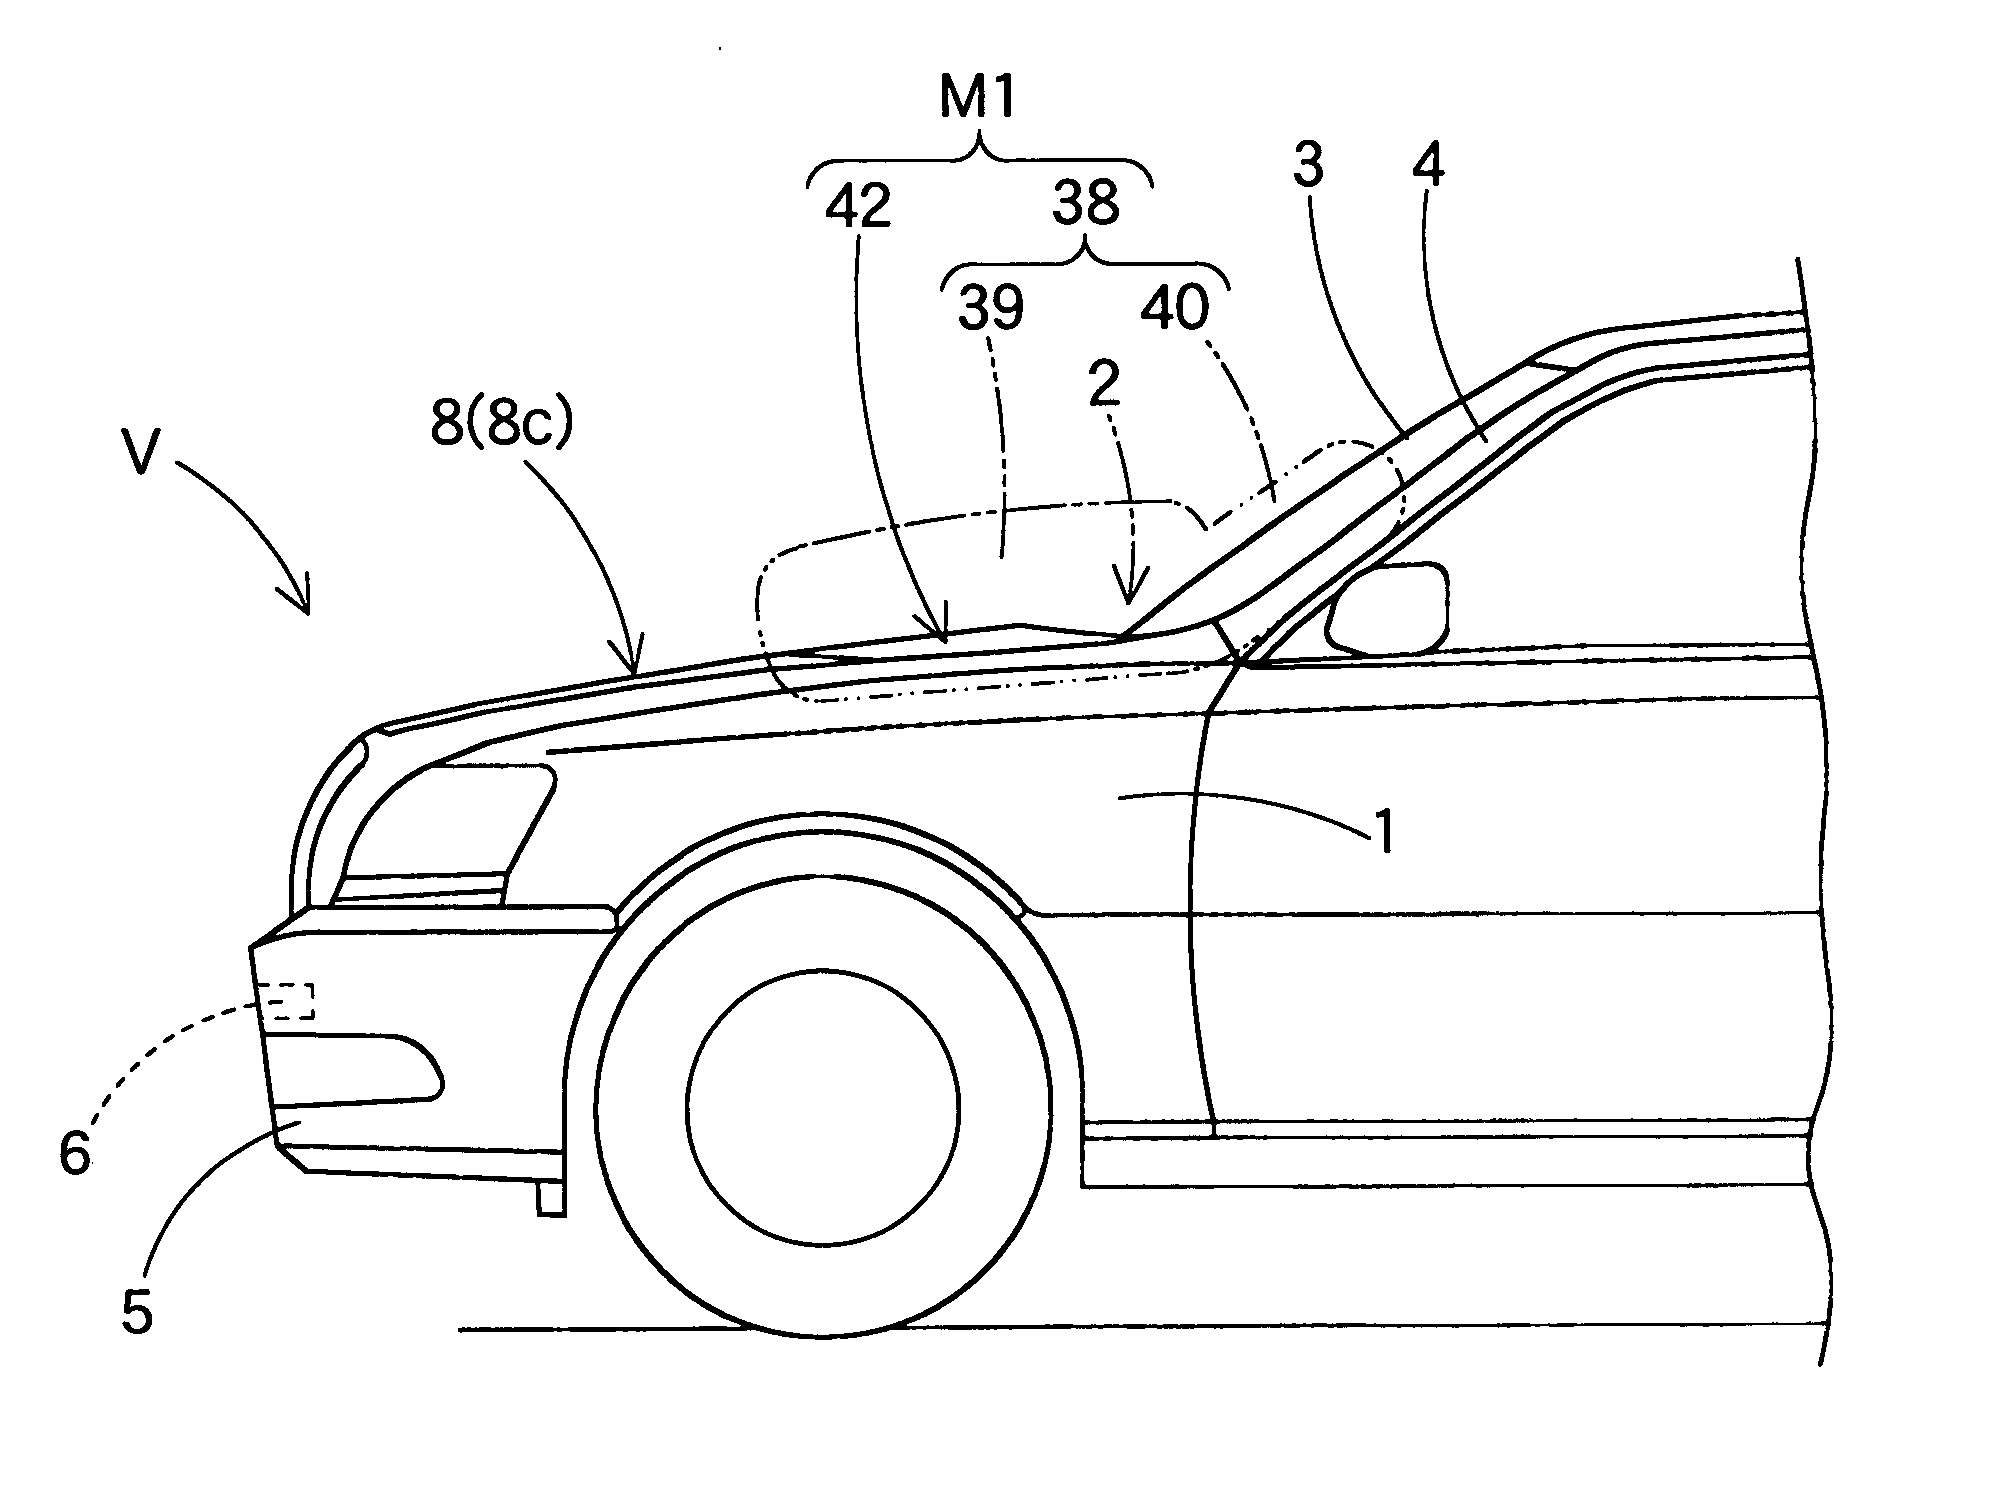 Pedestrian airbag system